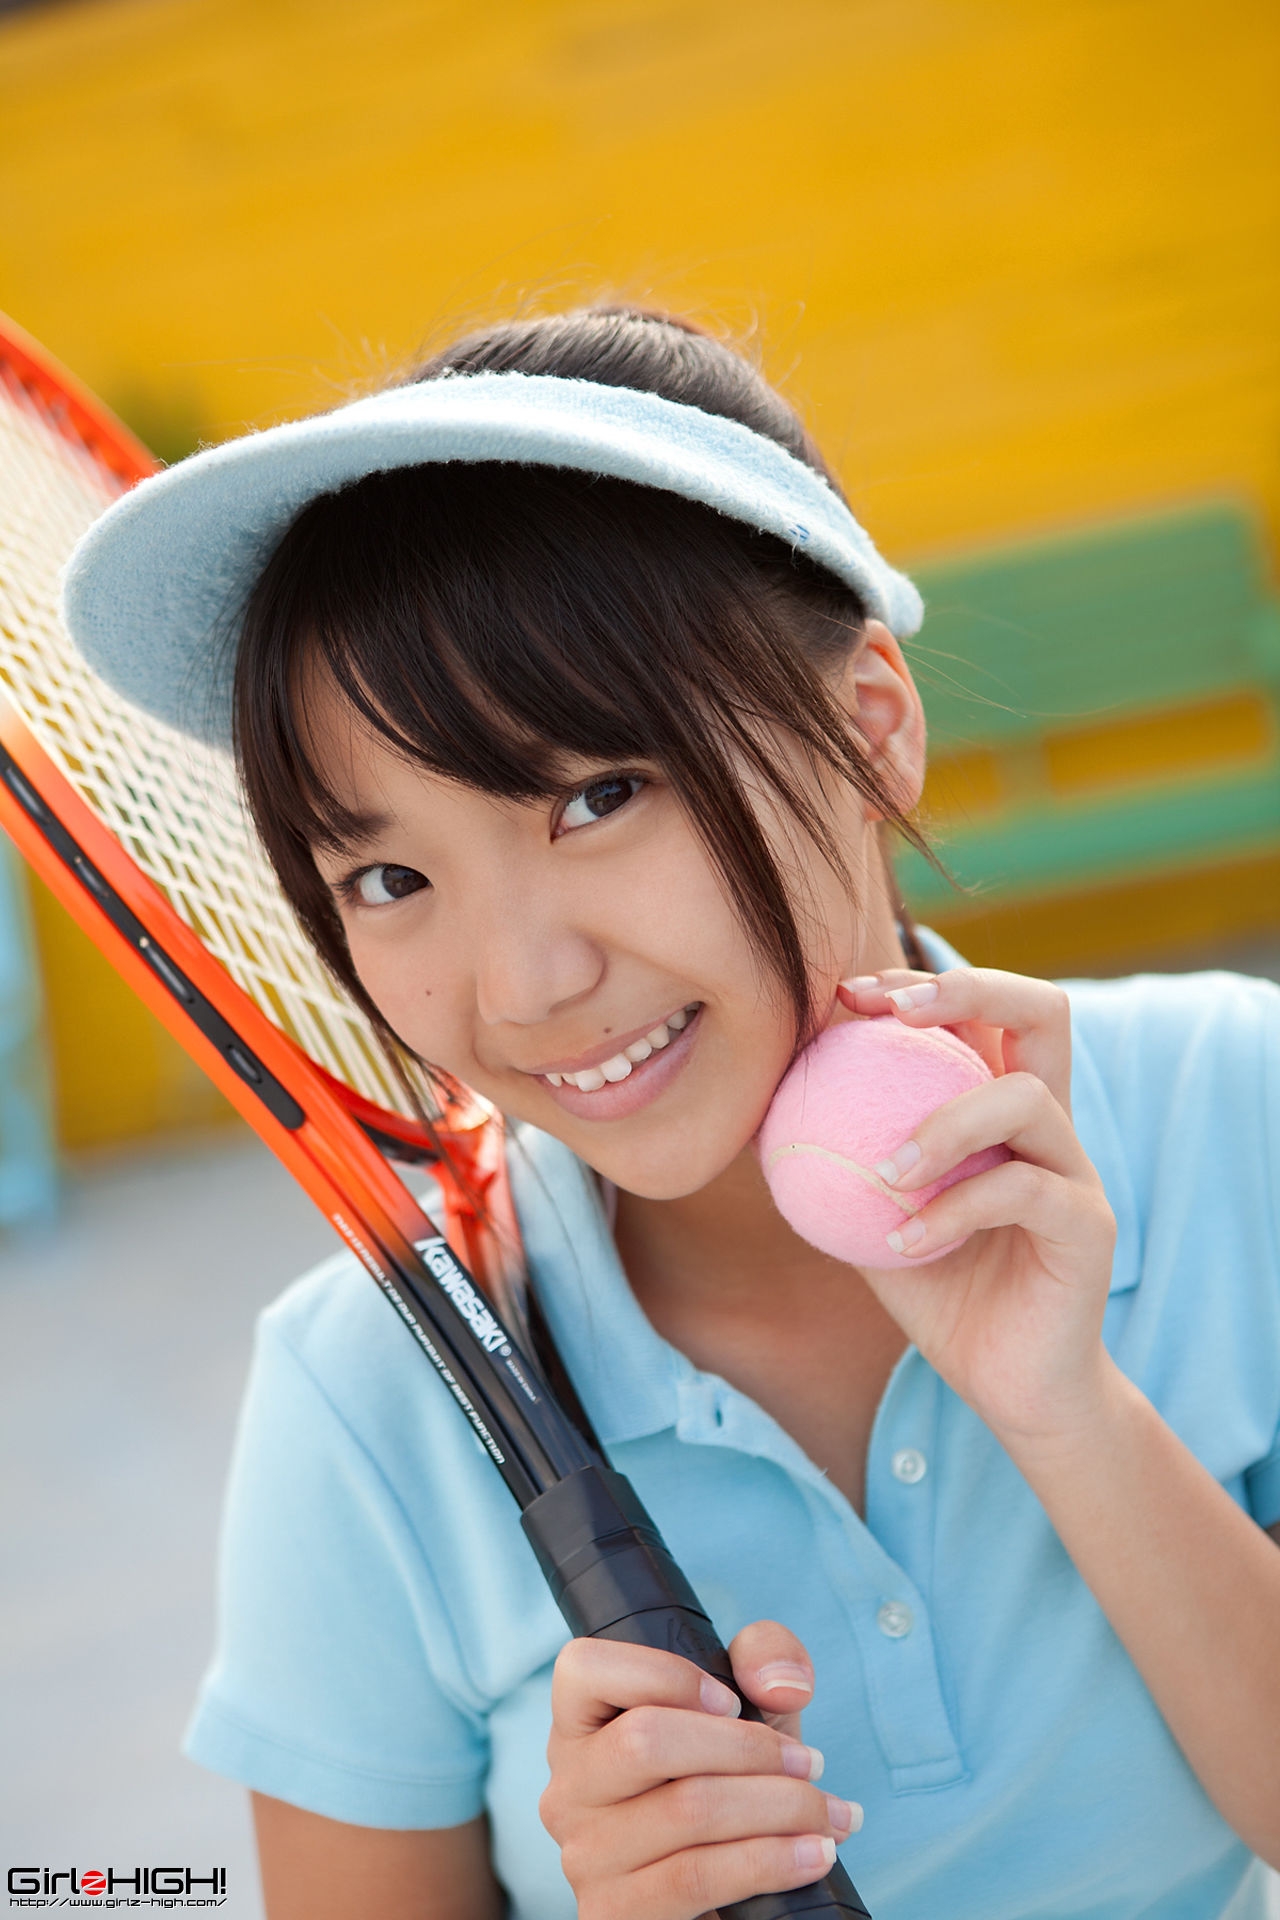 [Girlz-High] Fuuka Nishihama 西浜ふうか - 羽毛球少女 Special Gravure (STAGE1) 2.1 